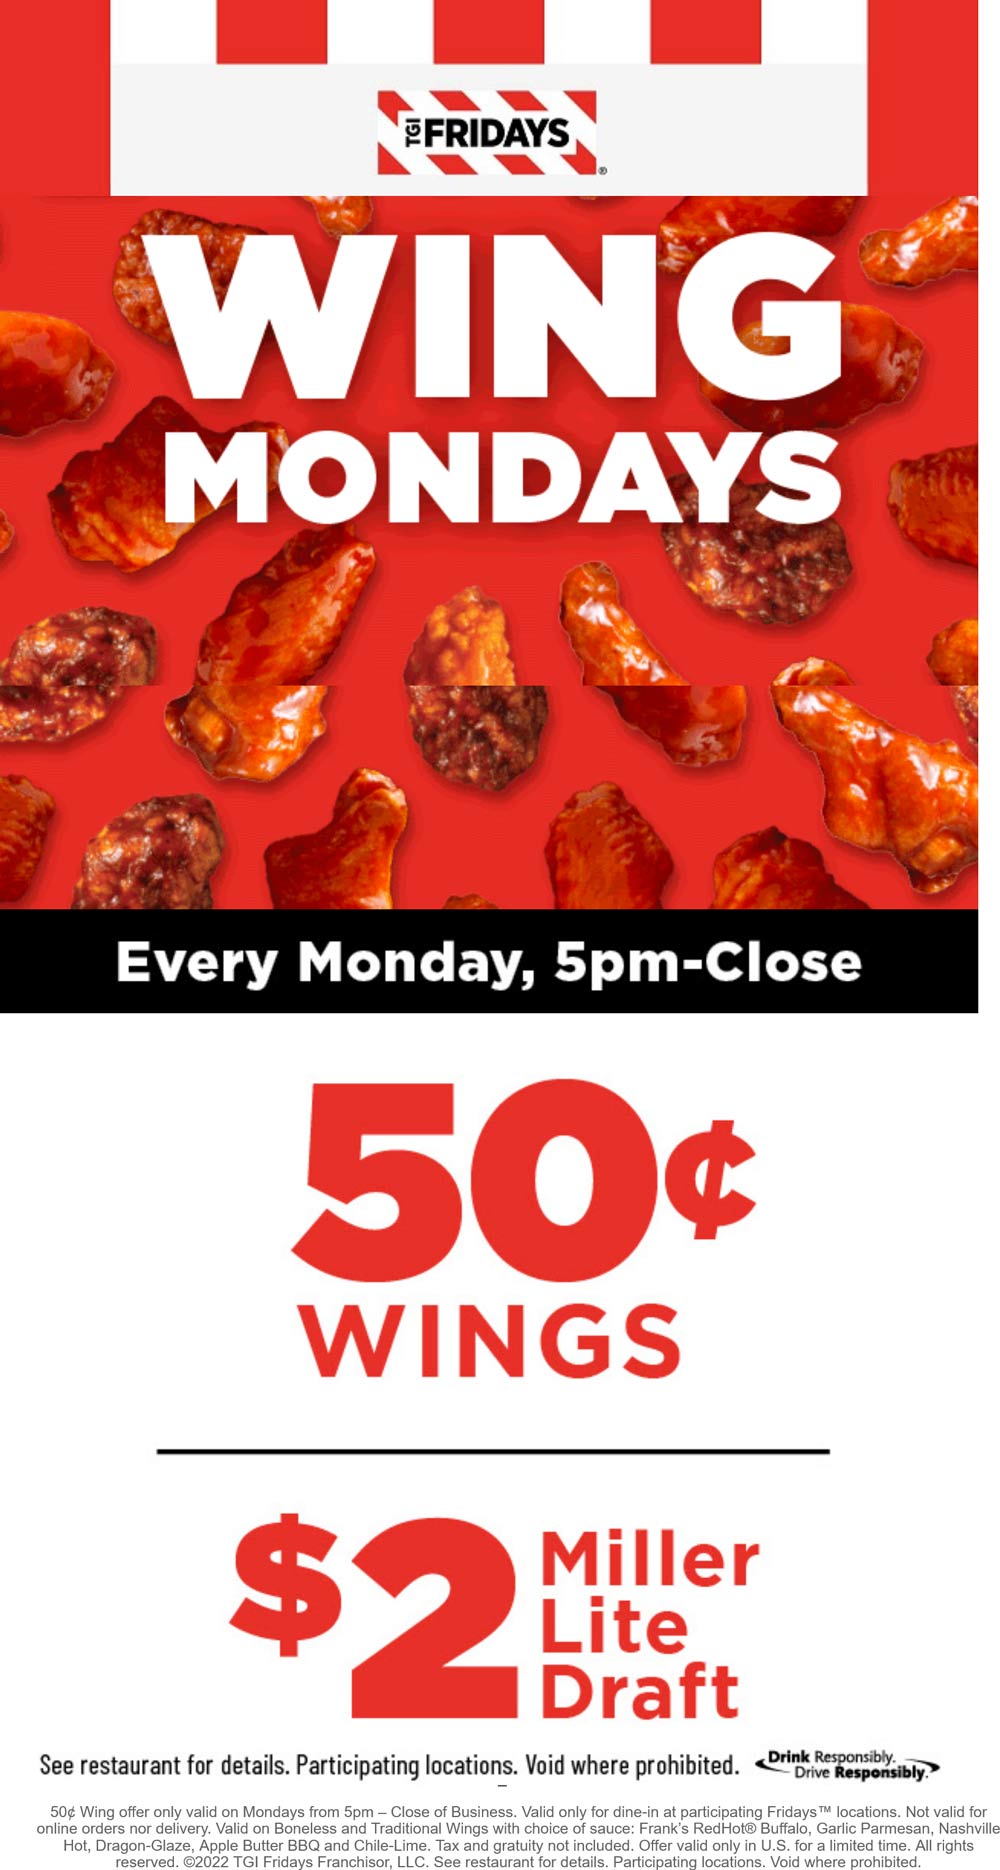 TGI Fridays restaurants Coupon  .50 cent wings & $2 draft Mondays at TGI Fridays restaurants #tgifridays 